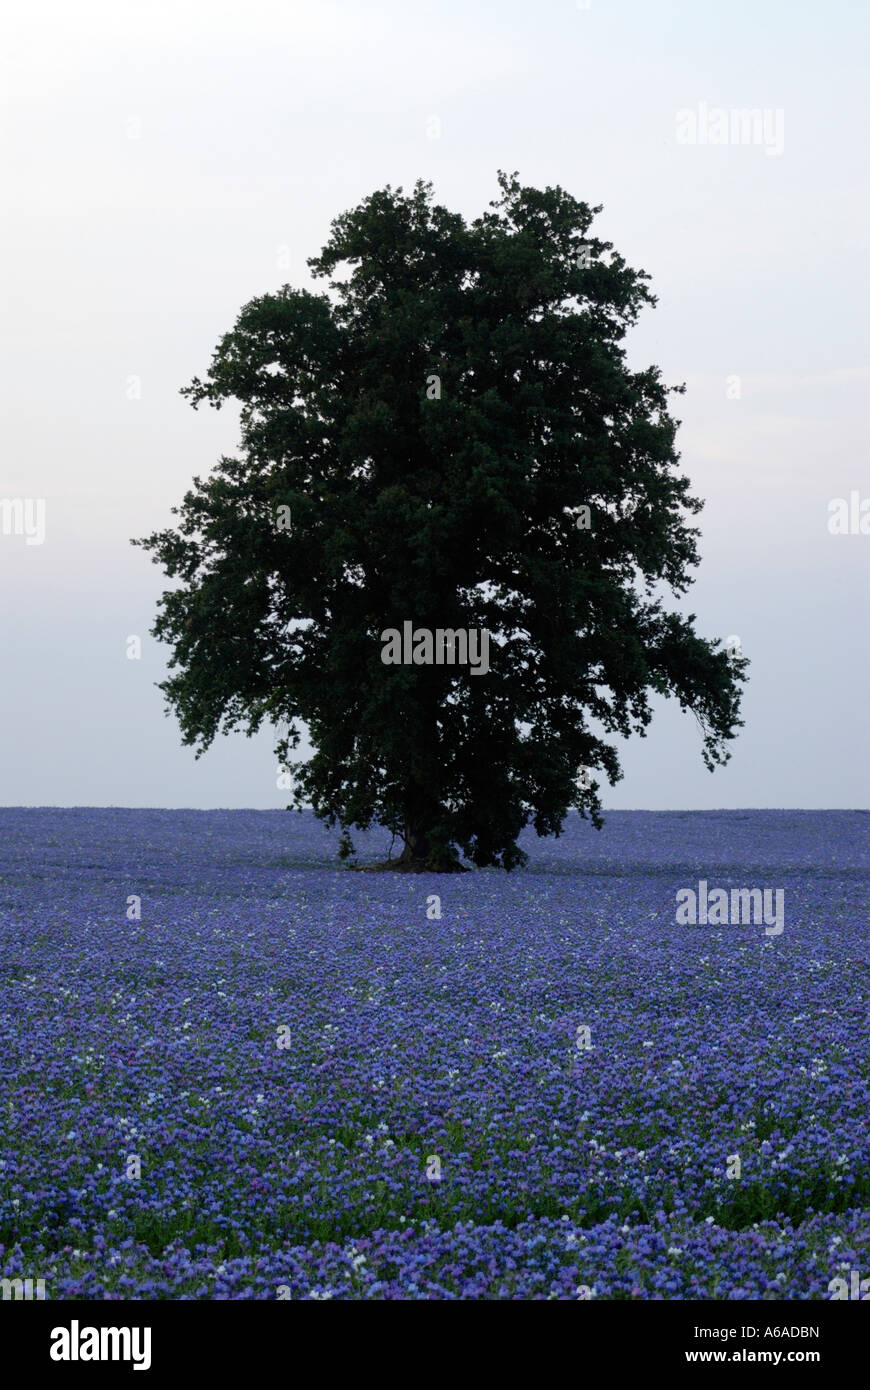 An oak tree Quercus robur grows in a field of the blue flowers of bugloss Echium species Stock Photo